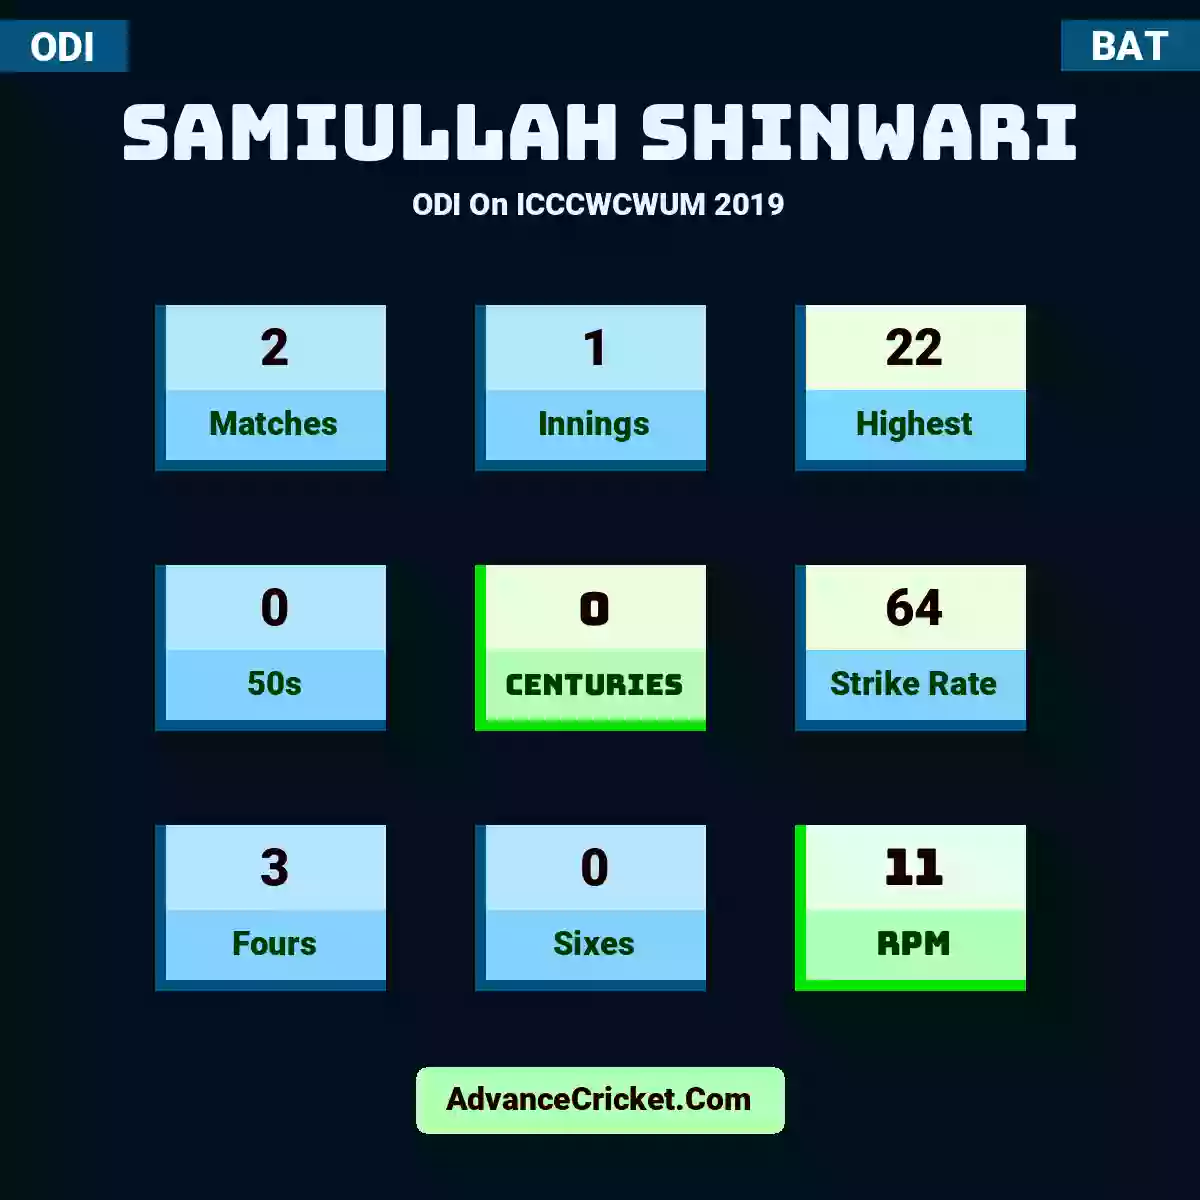 Samiullah Shinwari ODI  On ICCCWCWUM 2019, Samiullah Shinwari played 2 matches, scored 22 runs as highest, 0 half-centuries, and 0 centuries, with a strike rate of 64. S.Shinwari hit 3 fours and 0 sixes, with an RPM of 11.